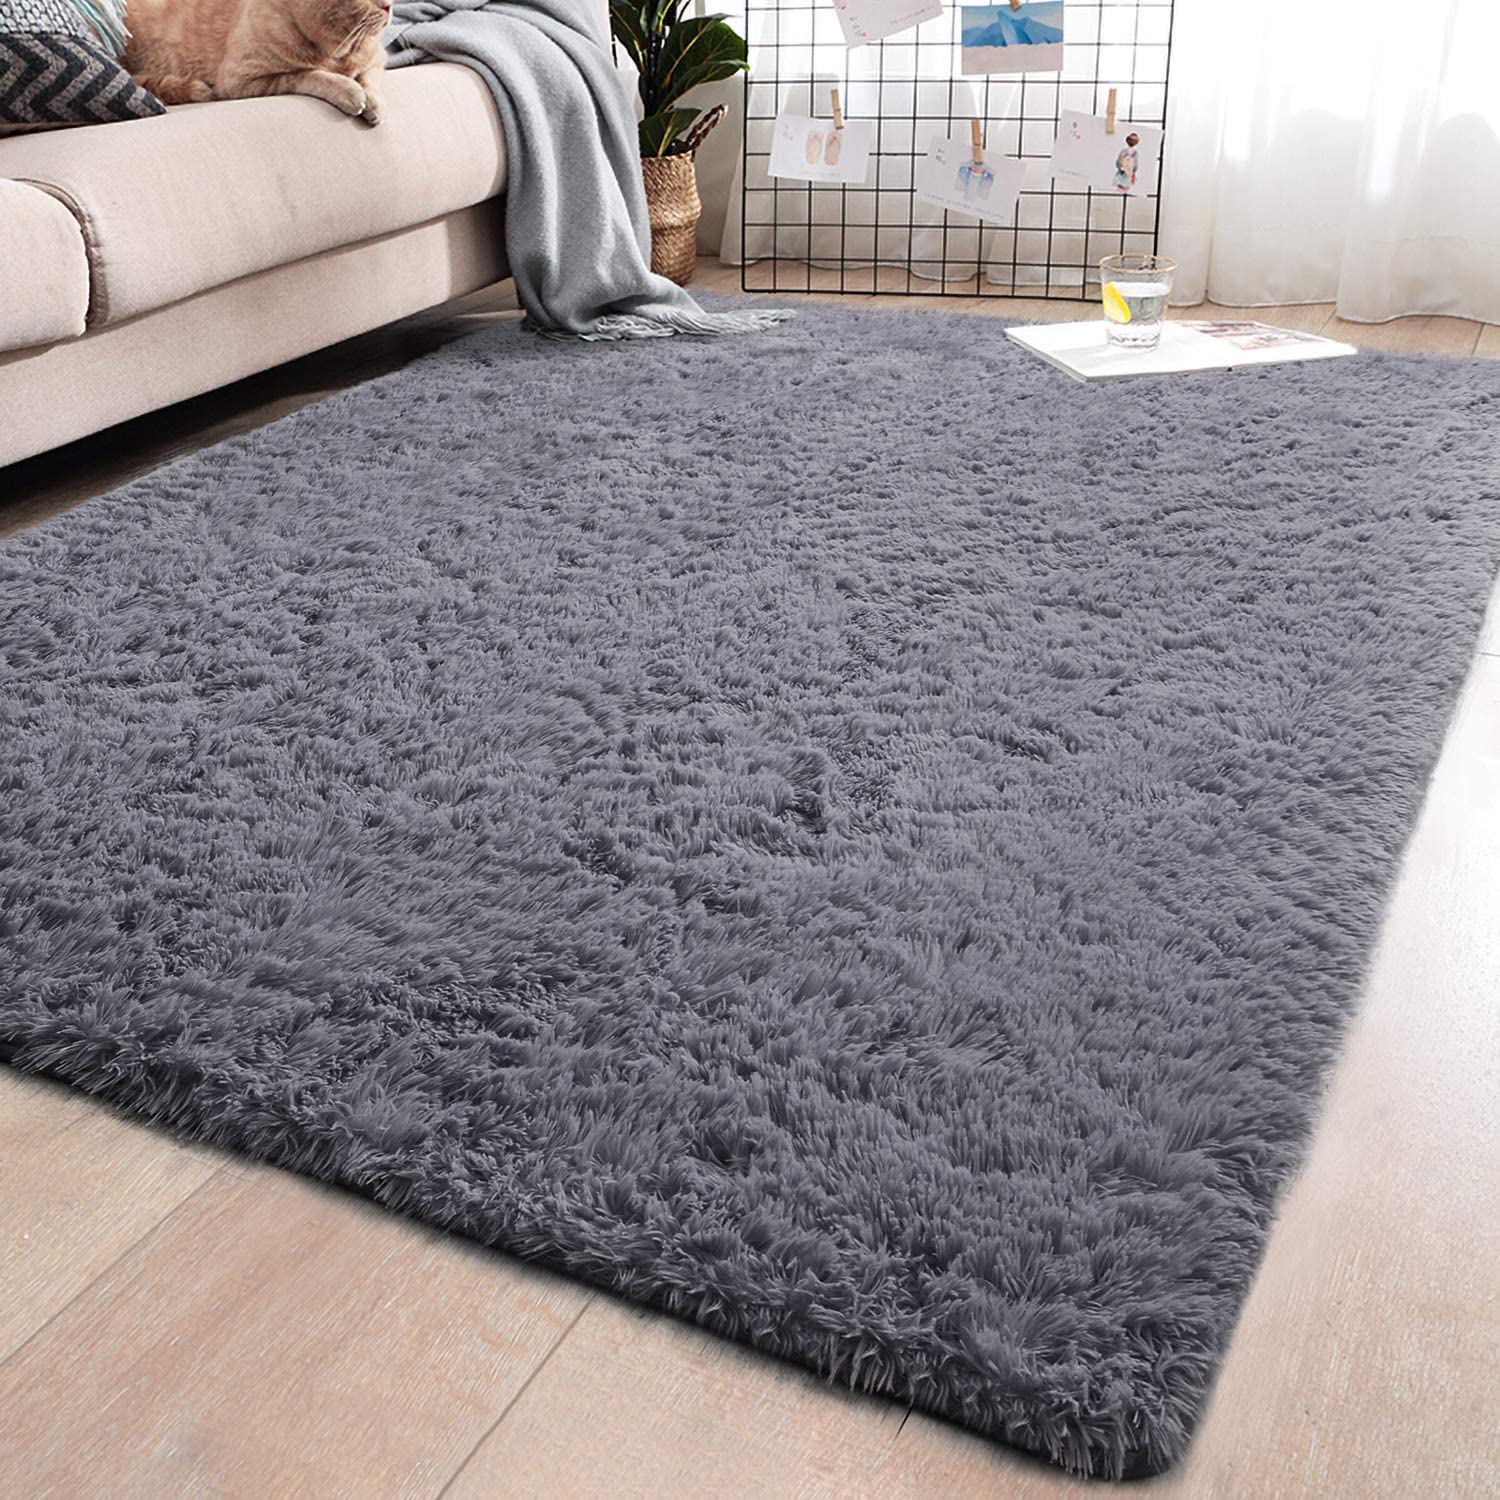 Soft Fluffy Rugs Anti-Skid Shaggy Area Rug Dining Room Deco Carpet Floor 